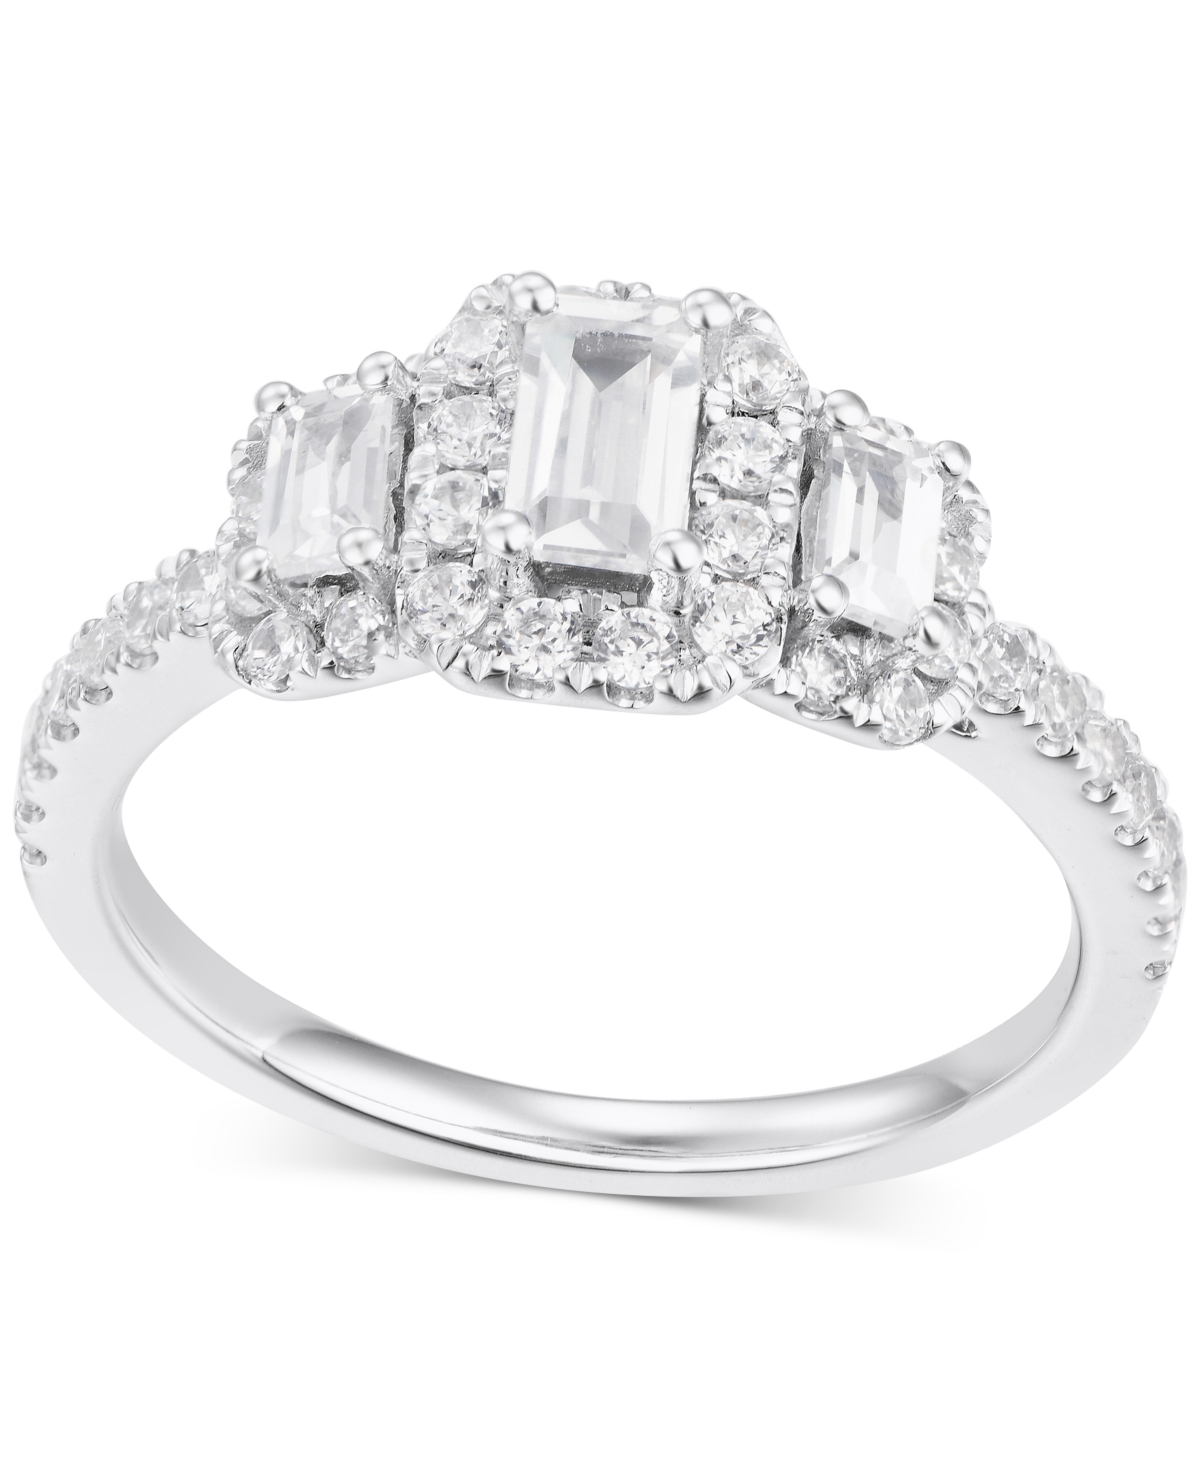 Diamond Emerald-Cut Halo Three Stone Ring (1 ct. t.w.) in 14k White Gold - White Gold